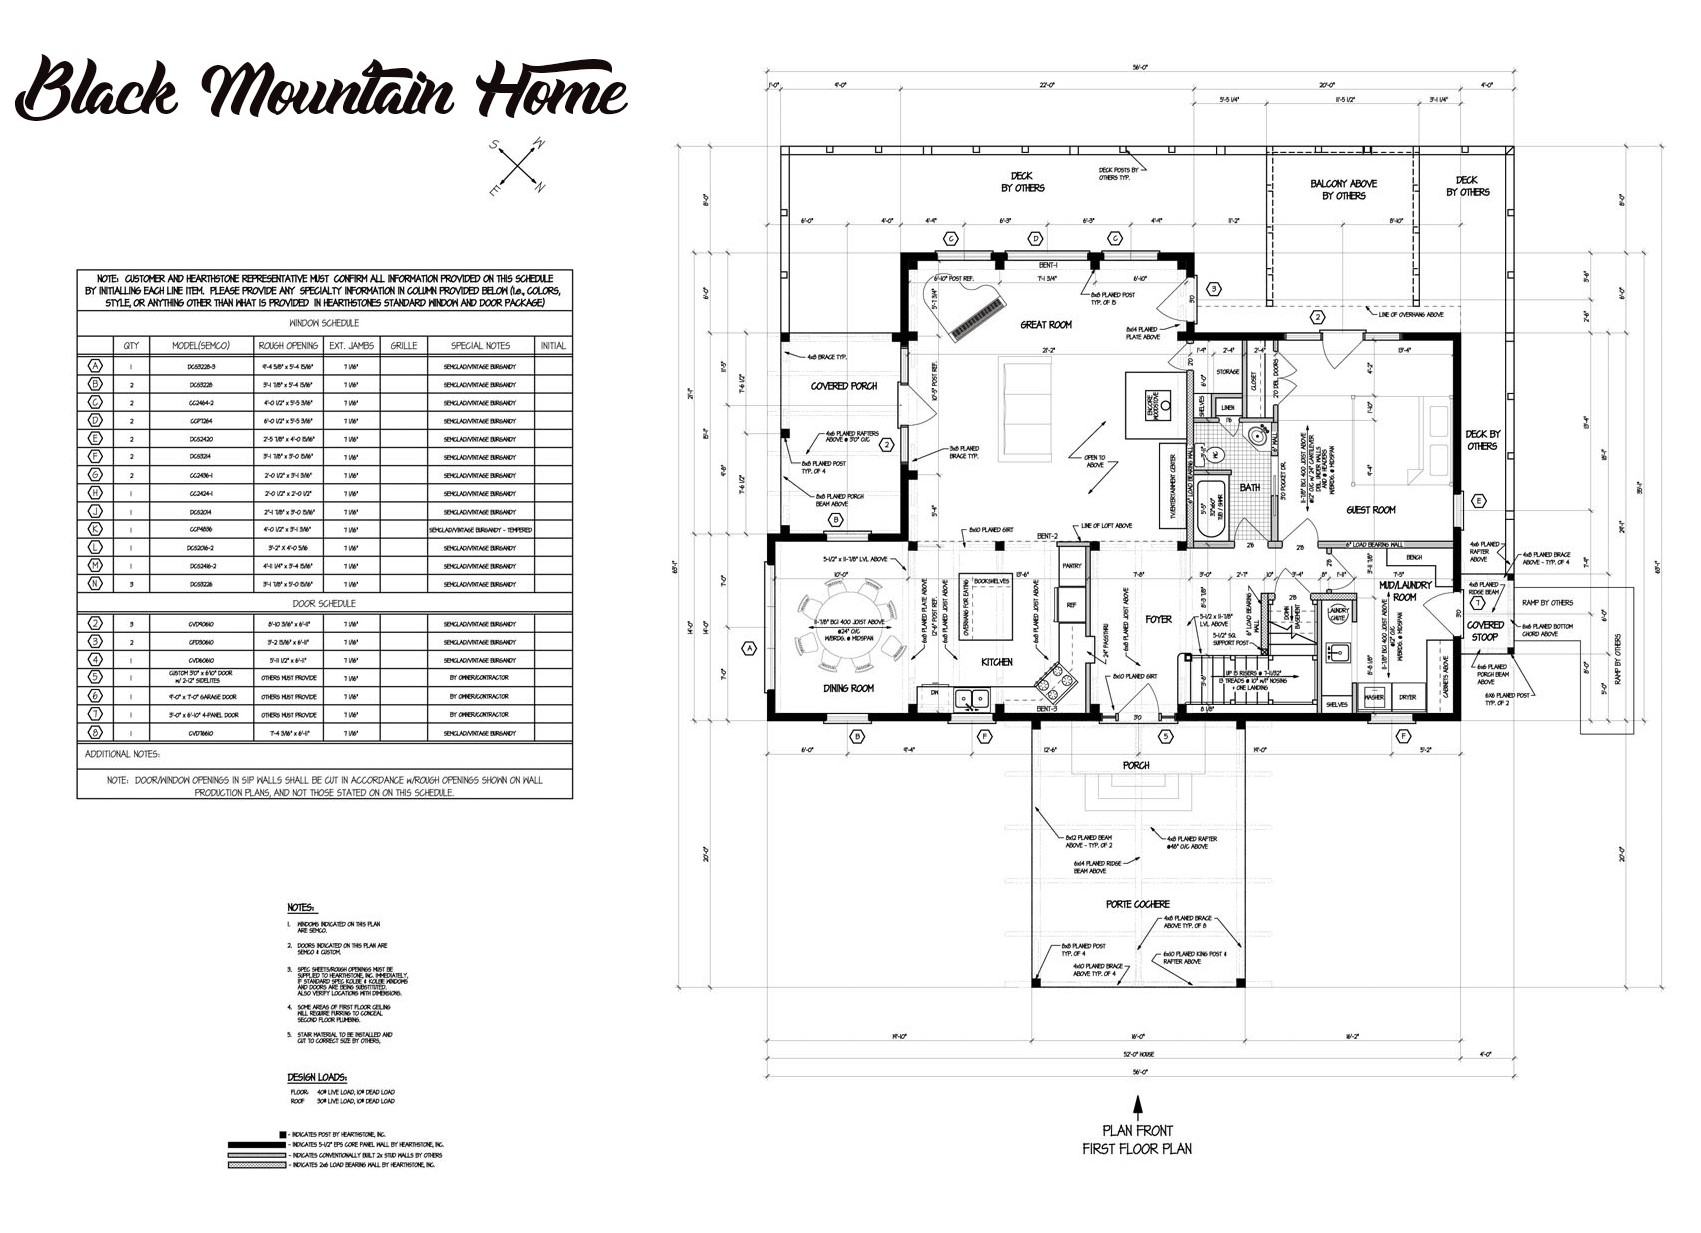 November 2018 Design of the Month "Black Mountain" plan1 0 edit Hearthstone Homes